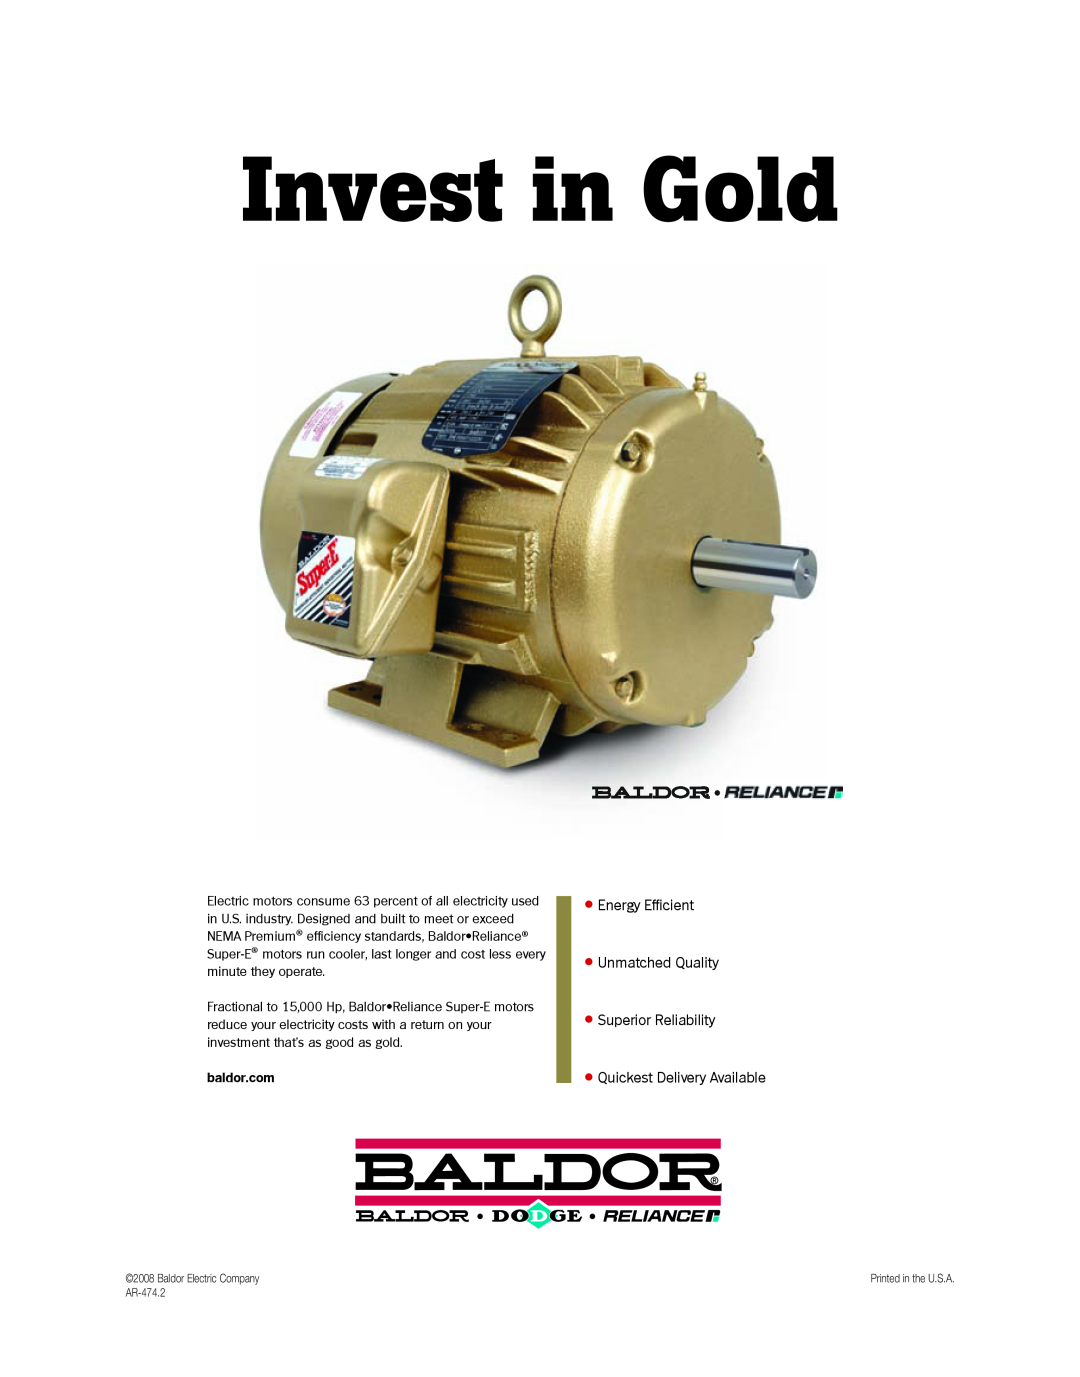 Baldor AR-474.2 manual Invest in Gold, •Energy Efficient •Unmatched Quality, Superior Reliability, baldor.com 